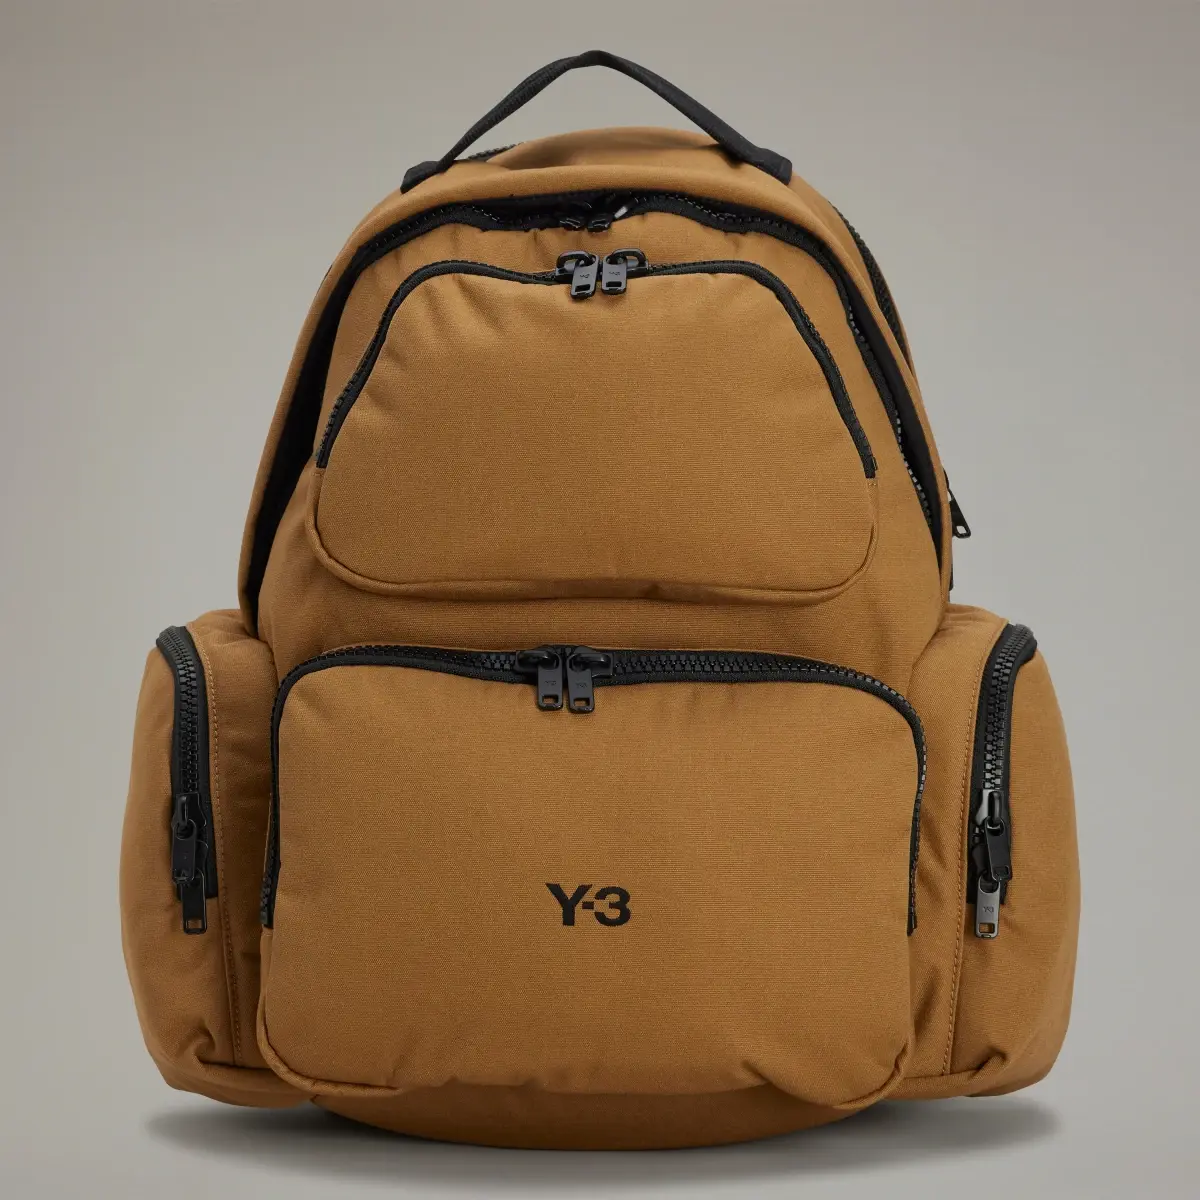 Adidas Y-3 Backpack. 2